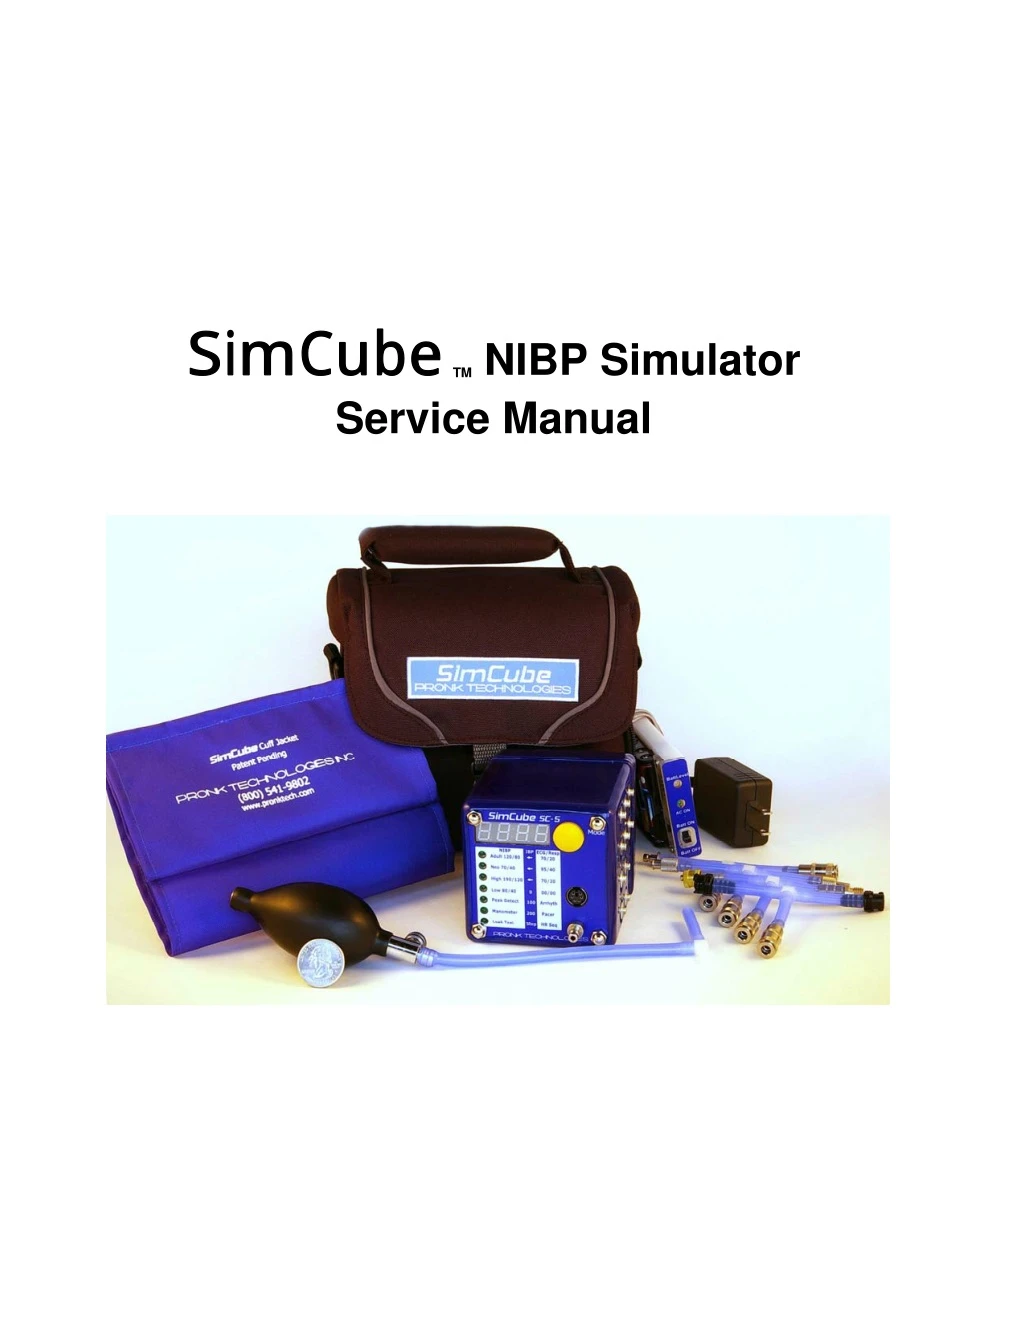 simcube simcube tm nibp simulator service manual